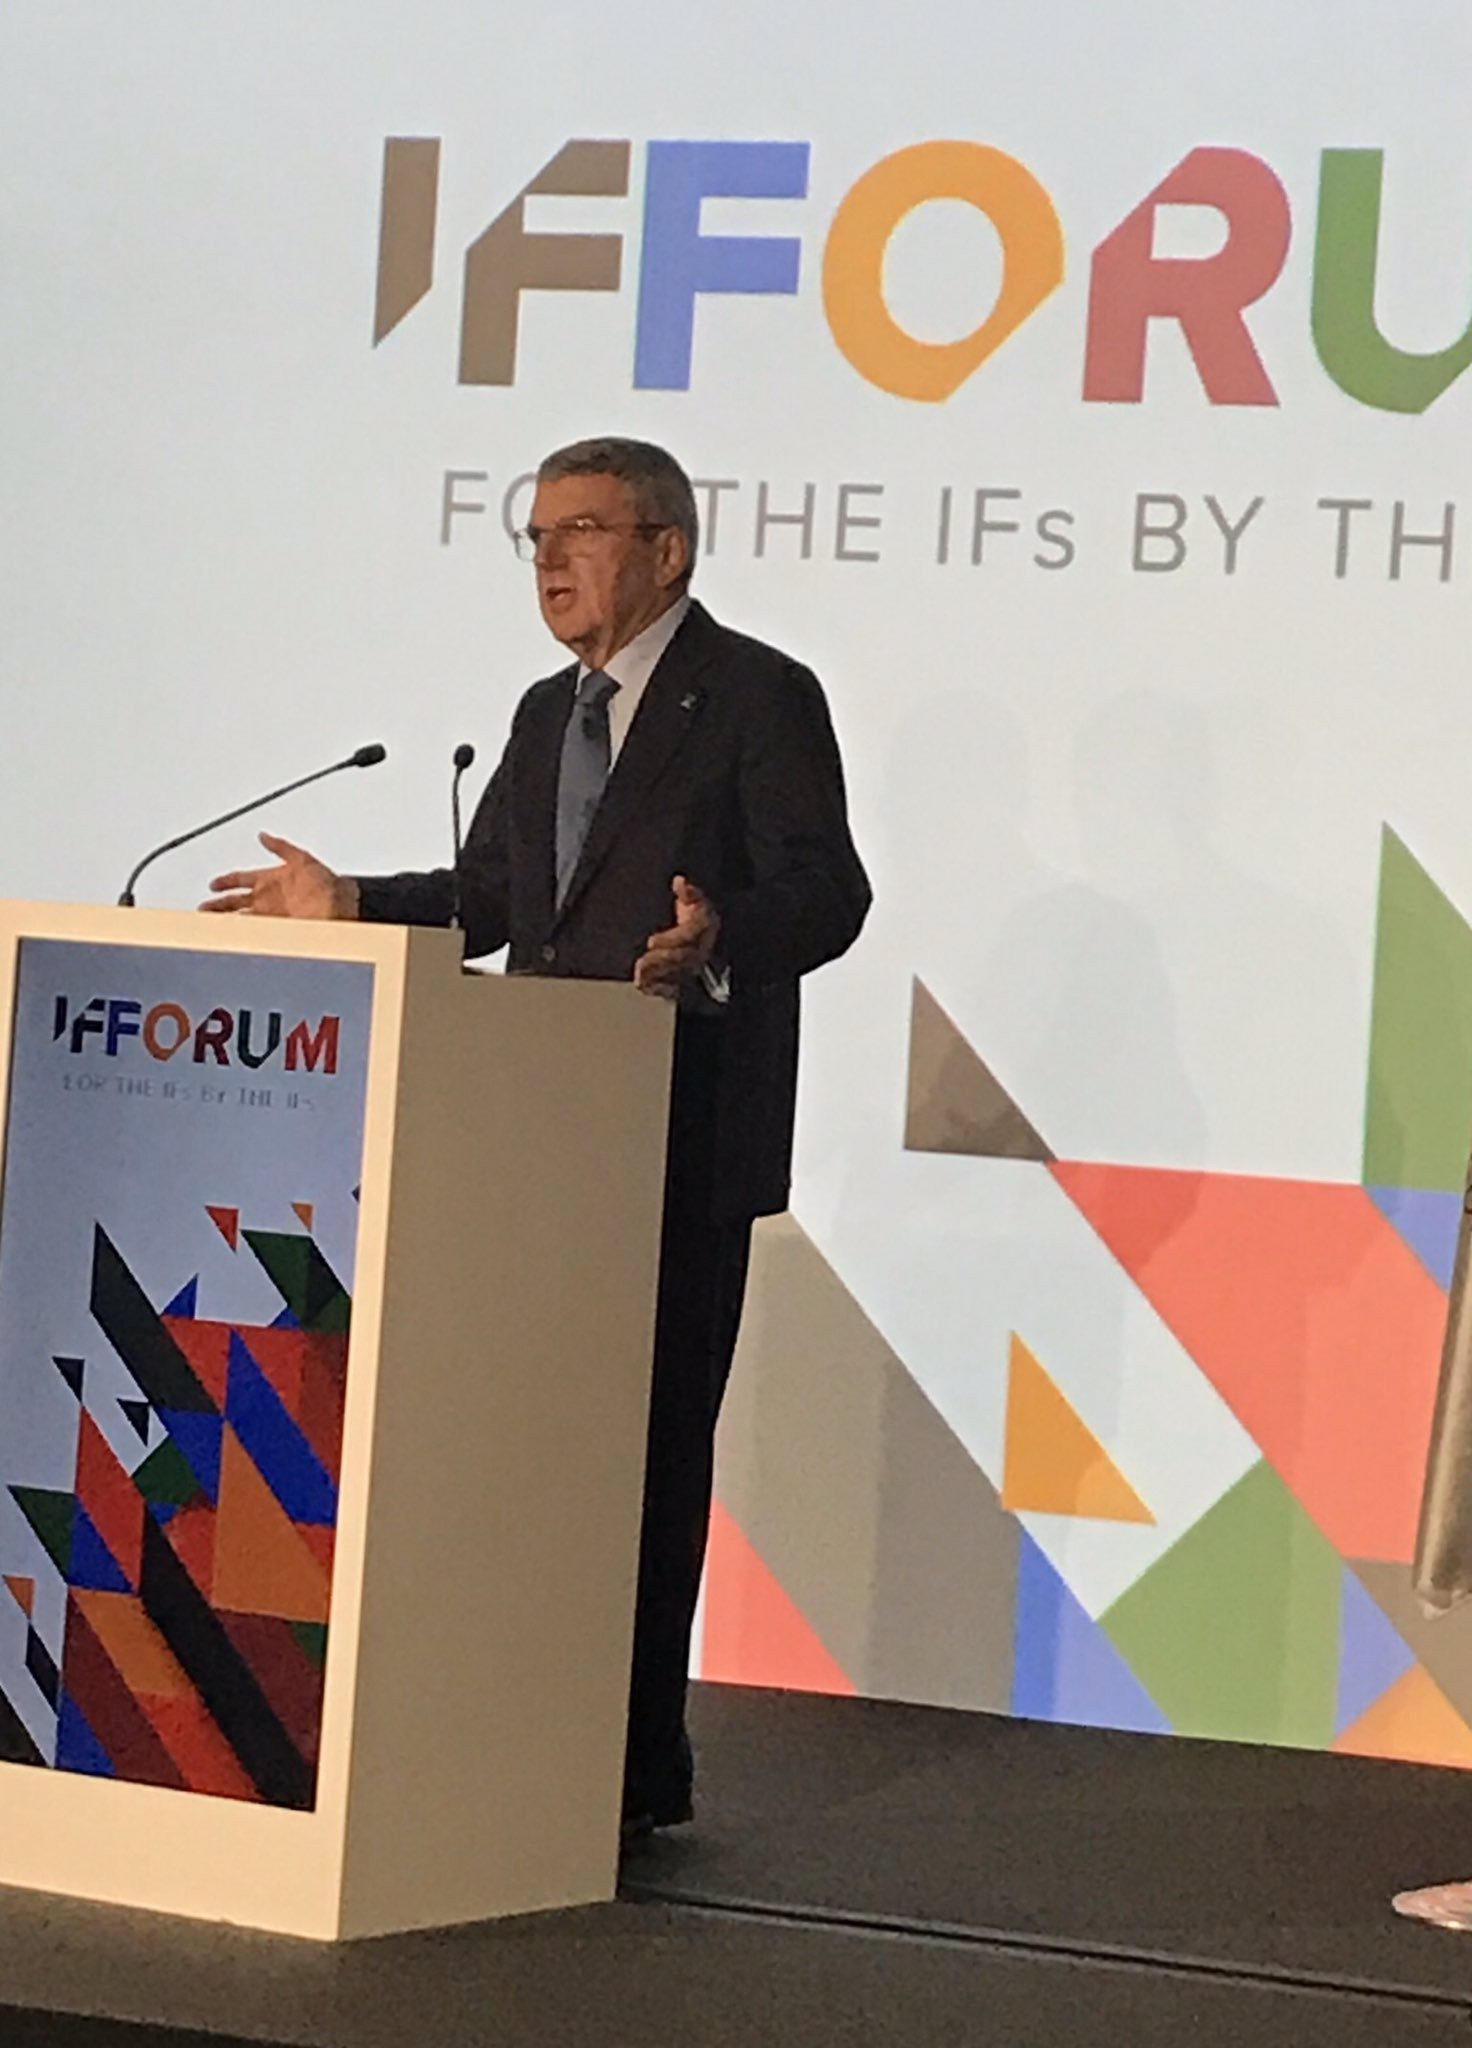 IOC President Thomas Bach opening last year's IF Forum ©SportAccord